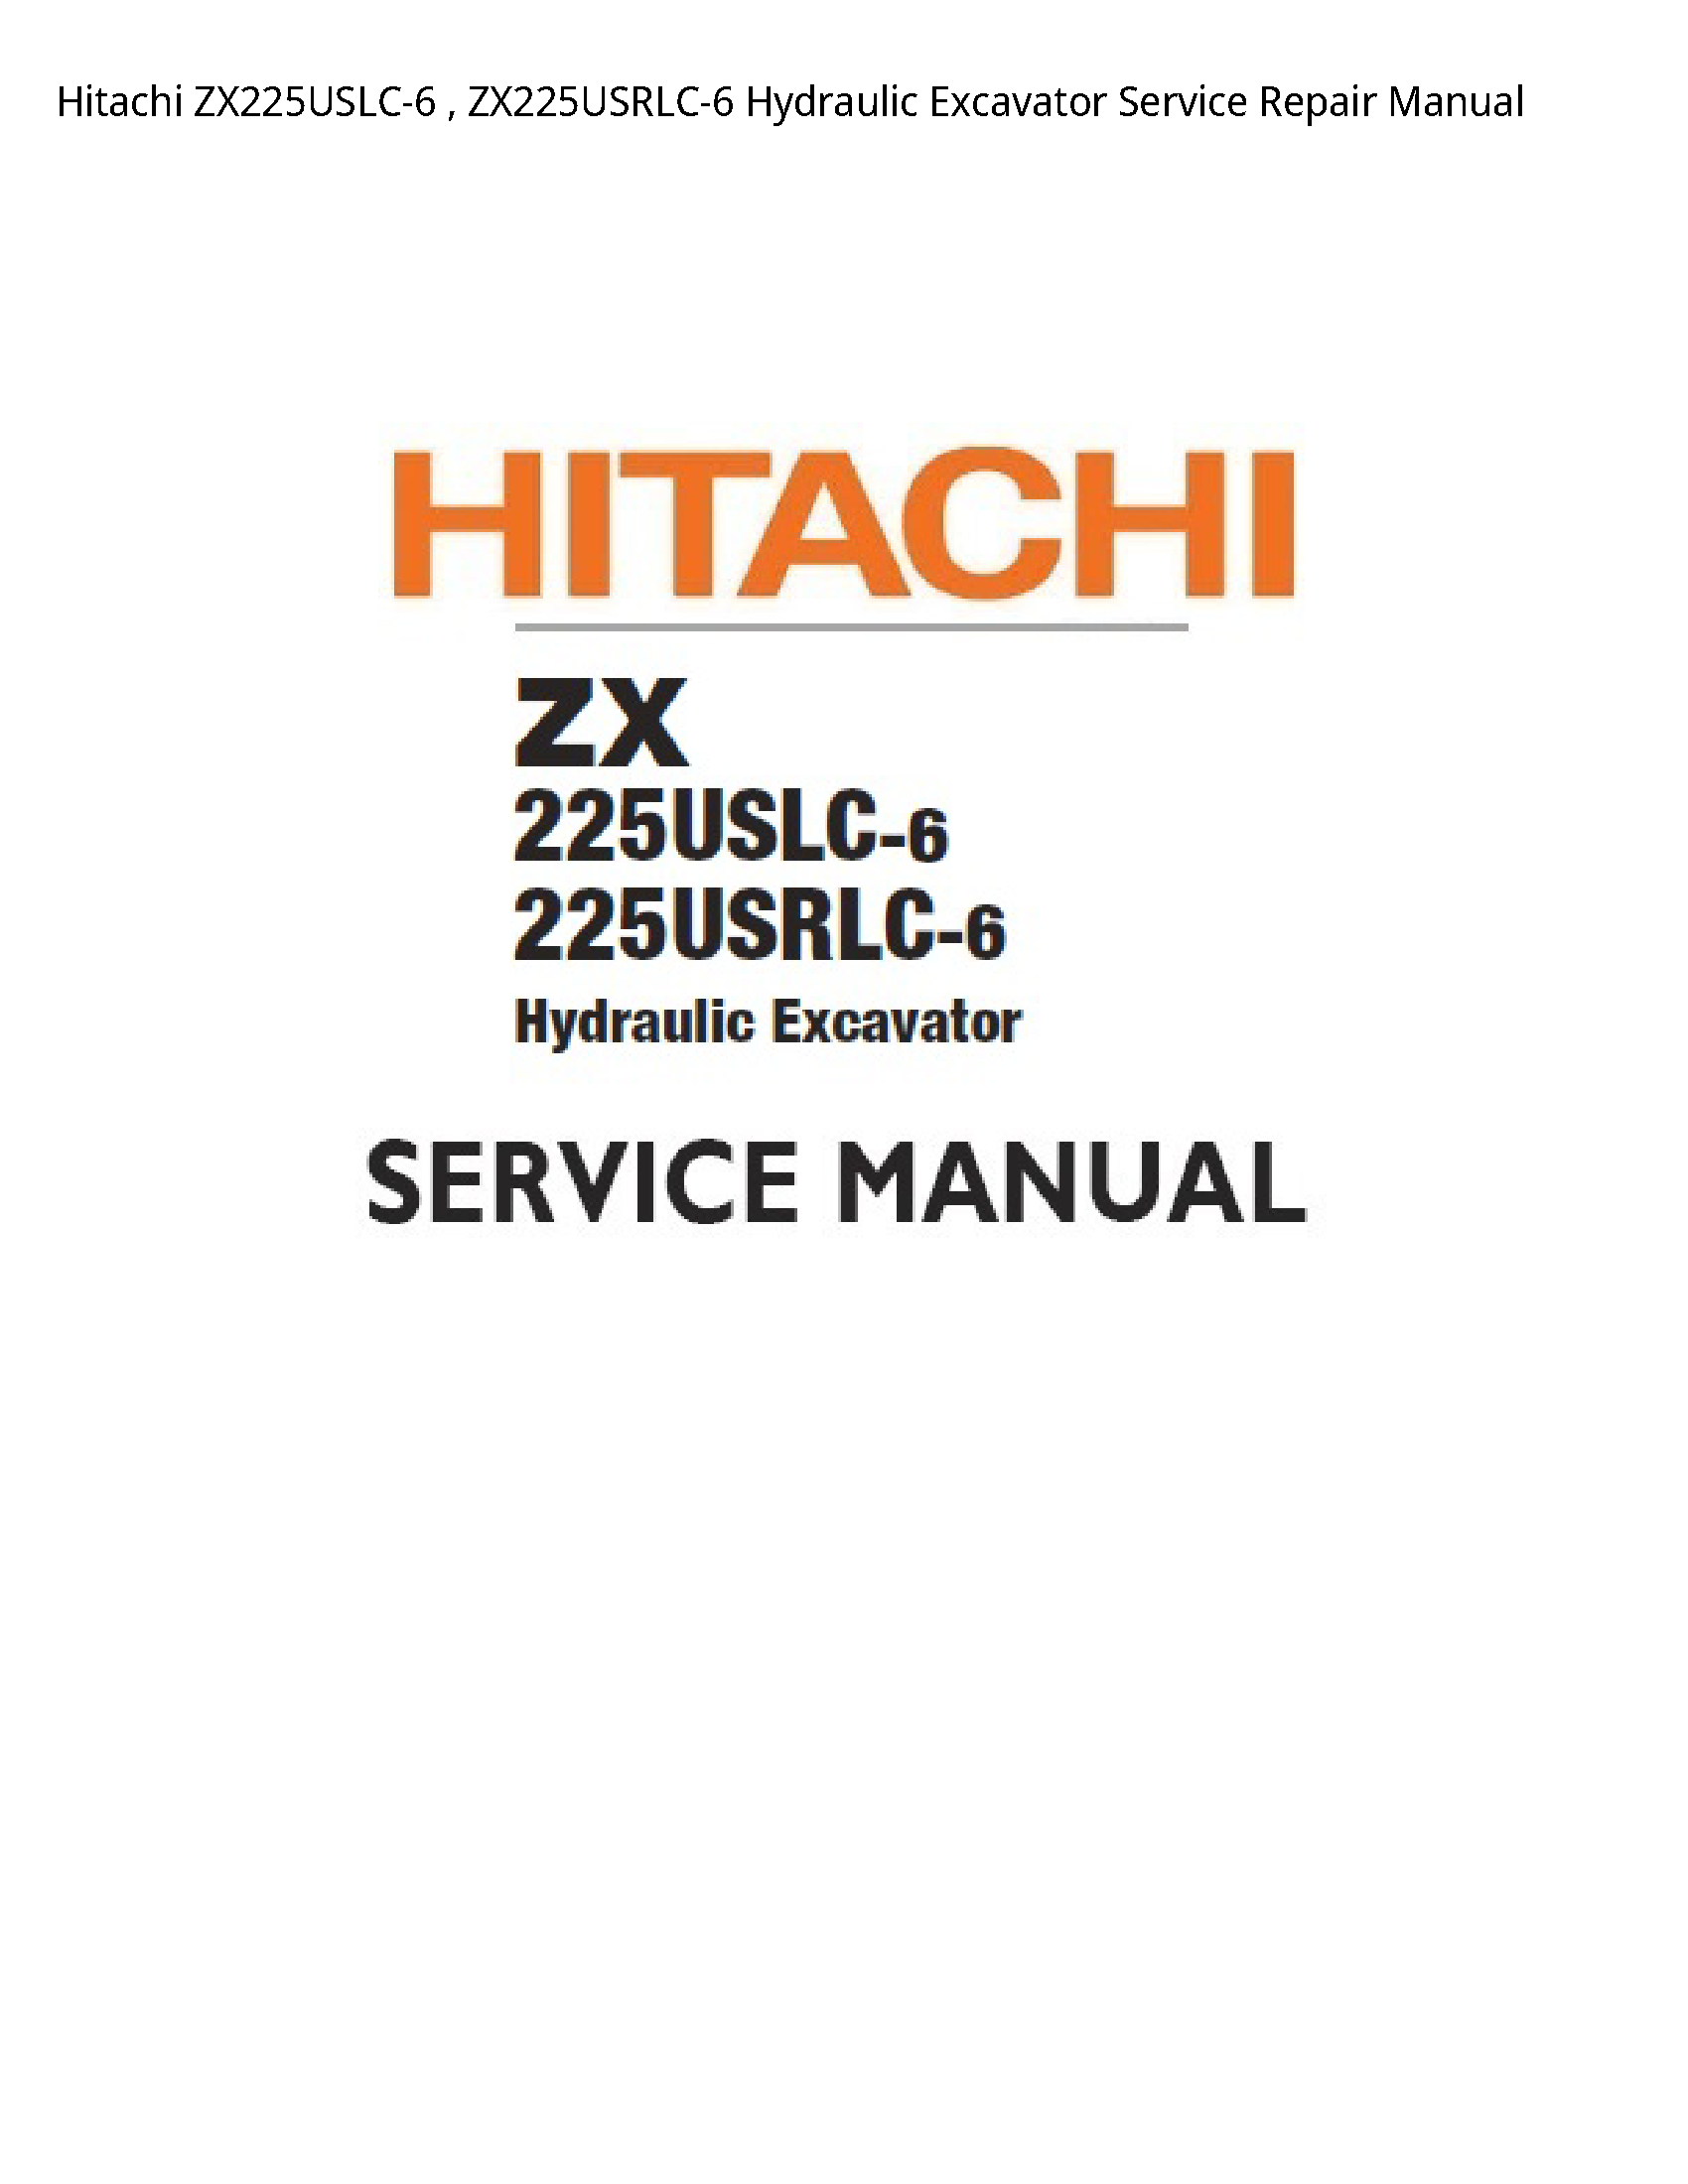 Hitachi ZX225USLC-6 Hydraulic Excavator manual